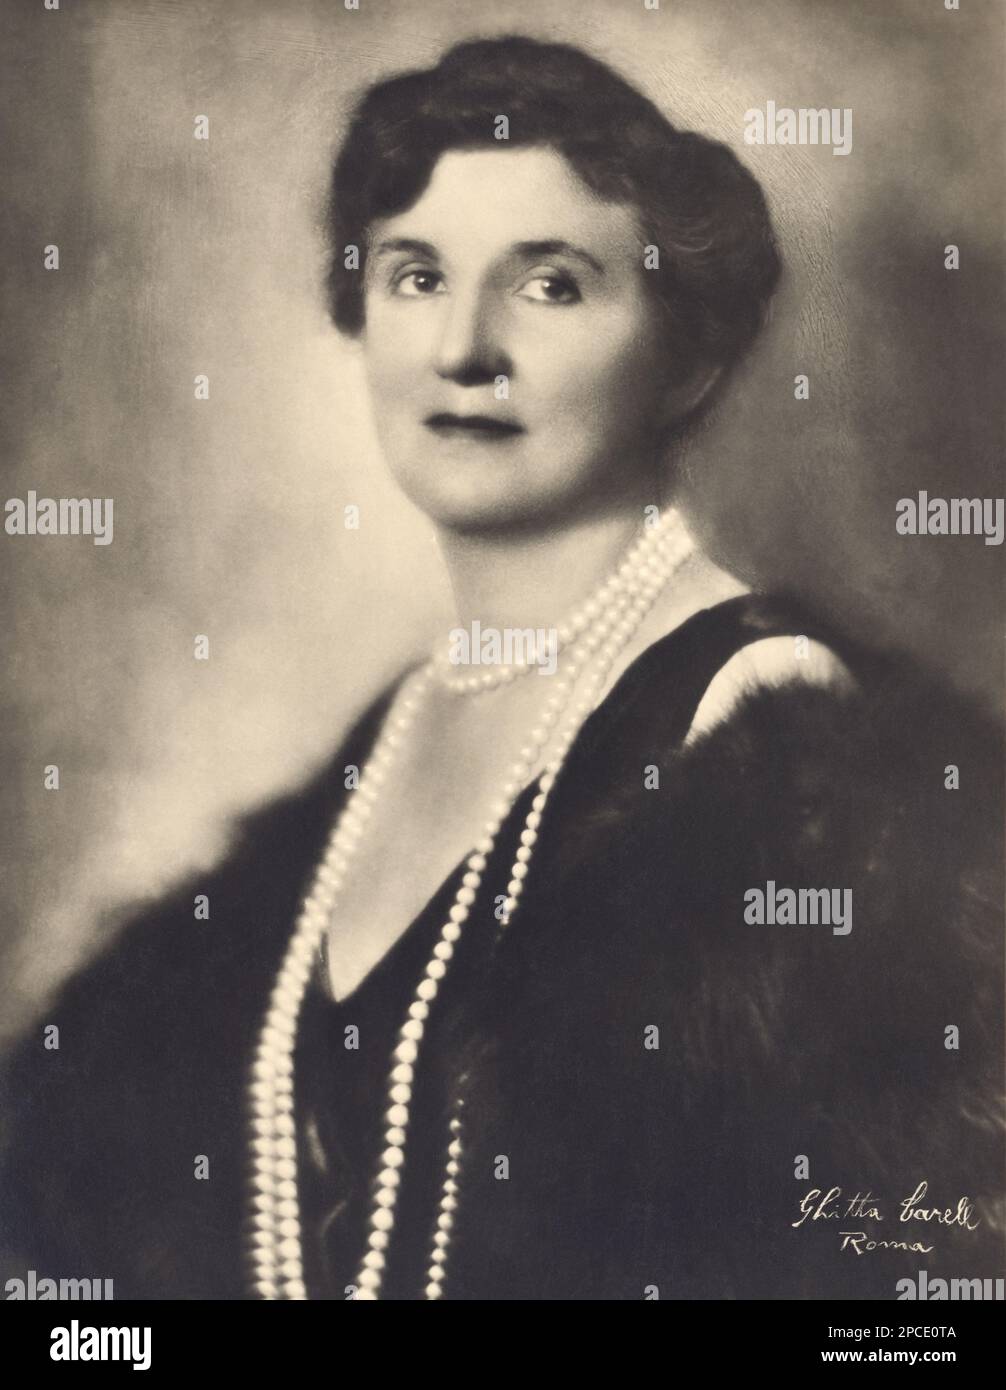 Ca. 1930 , ITALIEN : die Königin von Italien ELENA ( Helene von Montenegro , 1873 - 1952 ) im offiziellen Porträt von Ghitta Carrell , Rom - CASA SAVOIA - ITALIA - REALI - Nobiltà ITALIANA - ADEL - KÖNIGE - GESCHICHTE - FOTO STORICHE - gioiello - gioielli - Juwelen - Schmuck - collana di perle - Perlenkette - Halsband - Decollete' - Pelliccia ---- Archivio GBB Stockfoto